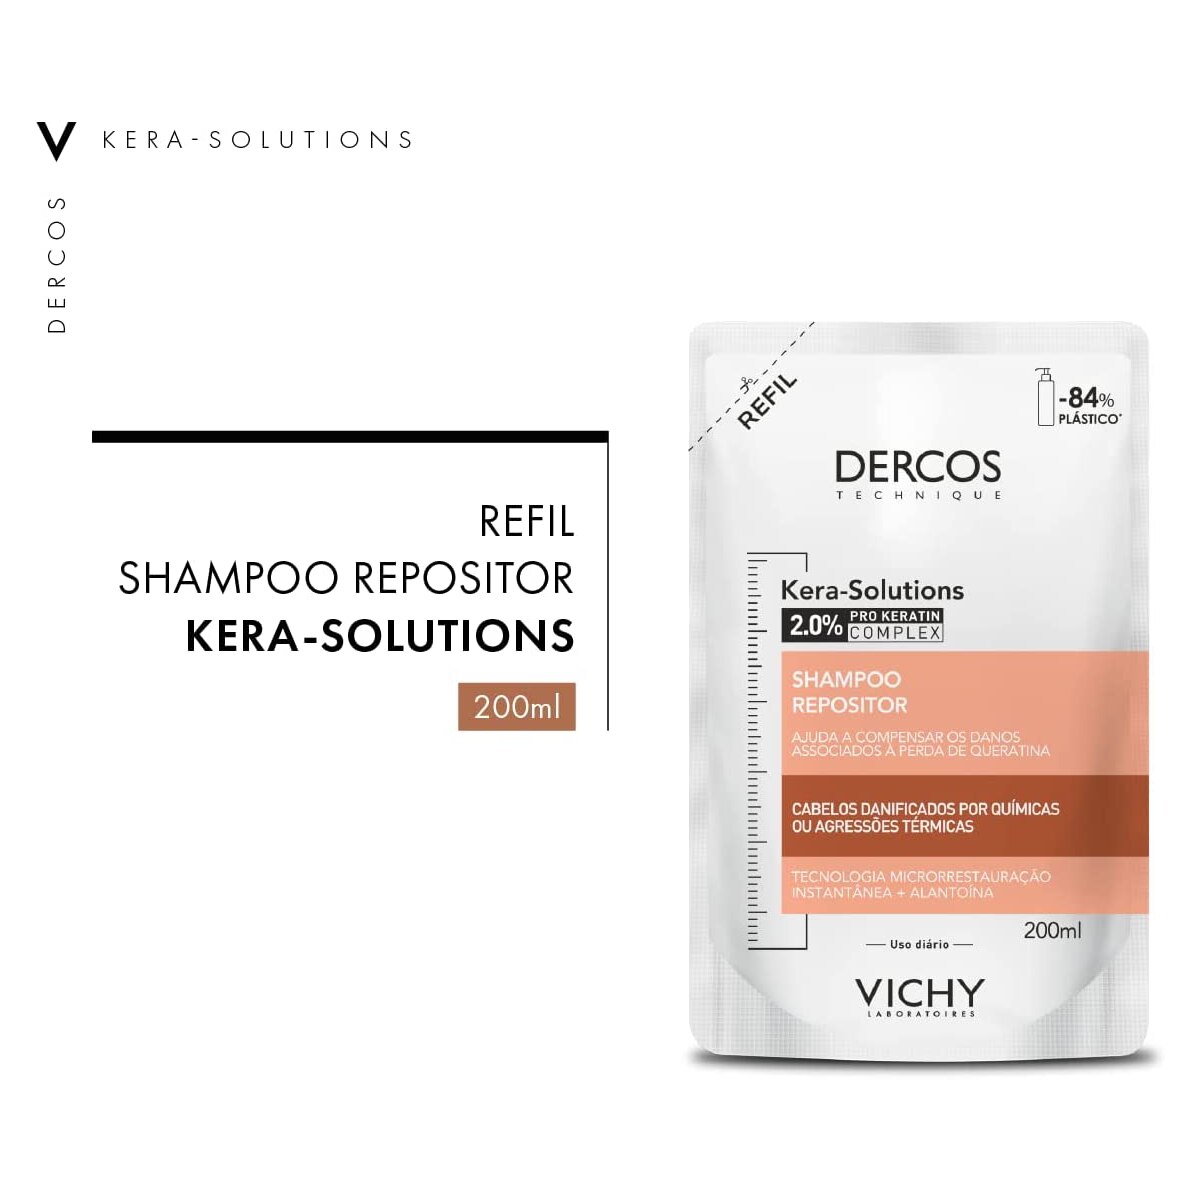 Refil Shampoo Dercos Vichy Kera-Solutions 200ml